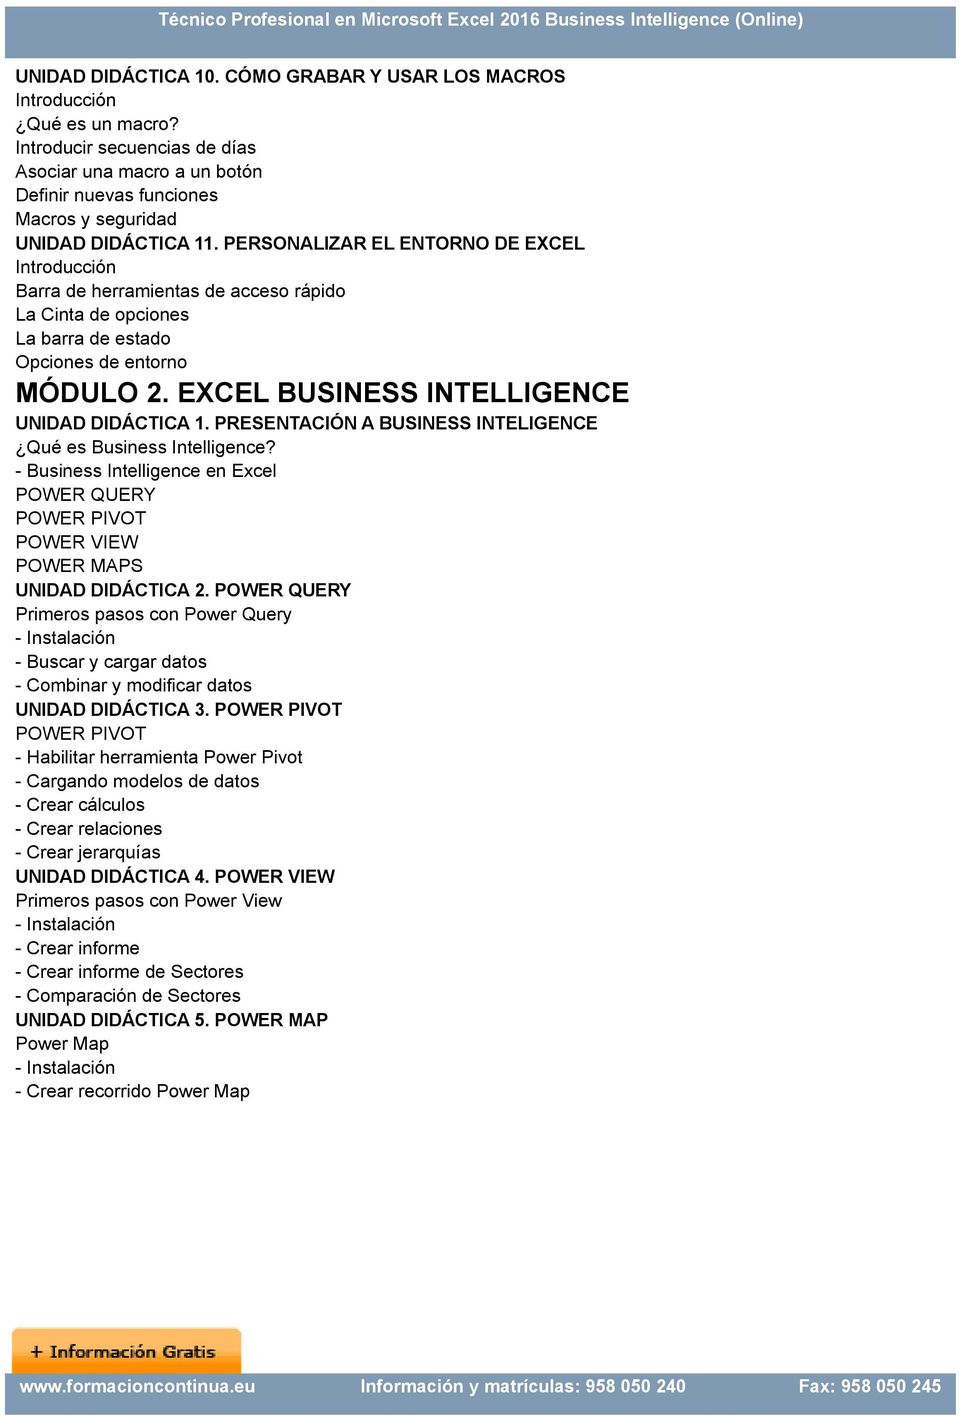 PRESENTACIÓN A BUSINESS INTELIGENCE Qué es Business Intelligence? - Business Intelligence en Excel POWER QUERY POWER PIVOT POWER VIEW POWER MAPS UNIDAD DIDÁCTICA 2.